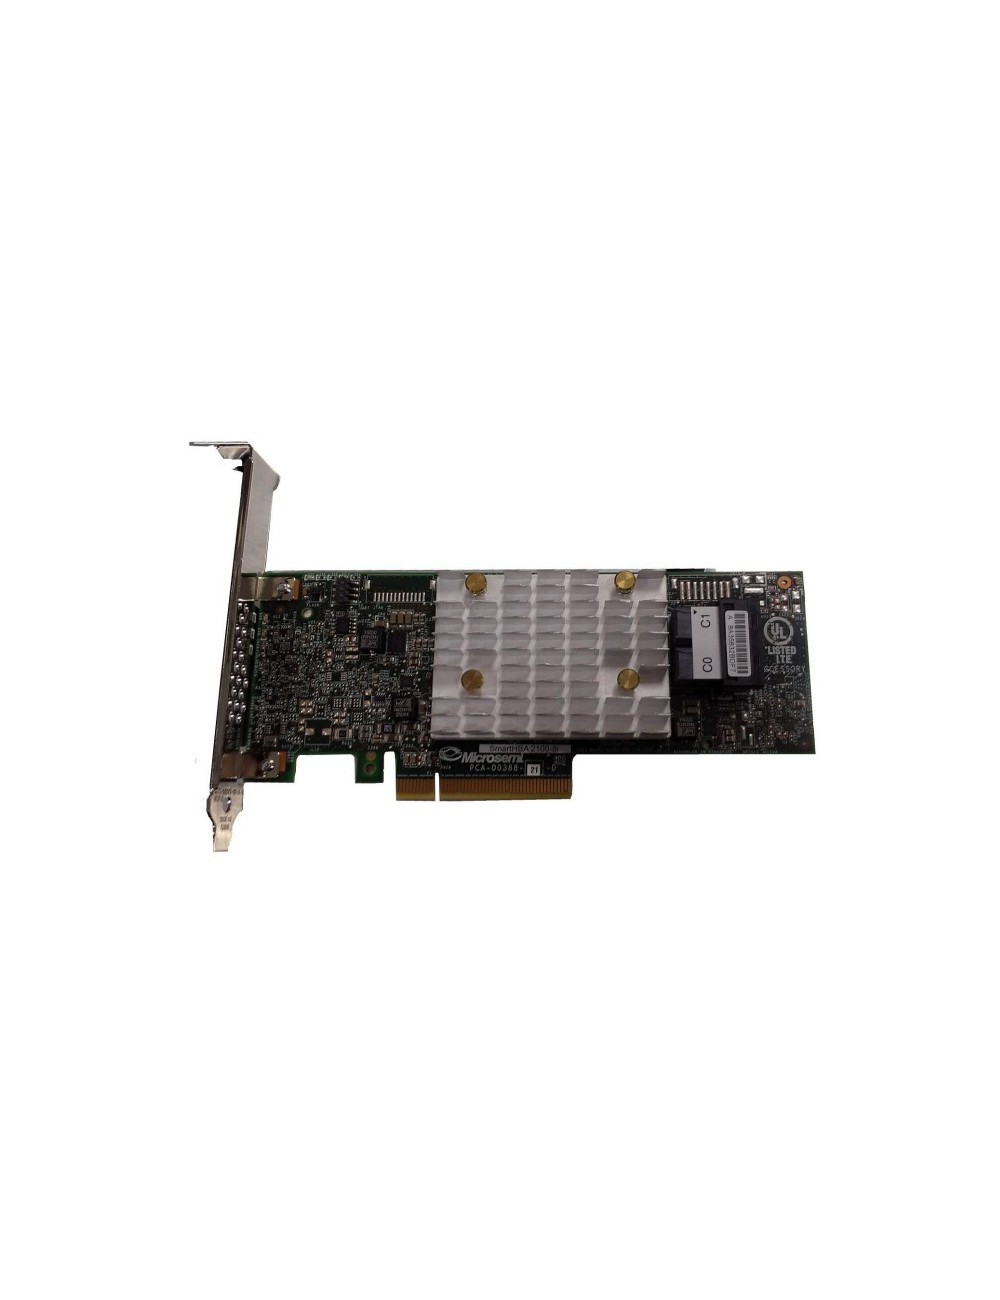 Fujitsu PY-SC3MA2 contrôleur RAID PCI Express x8 3.0 12 Gbit s